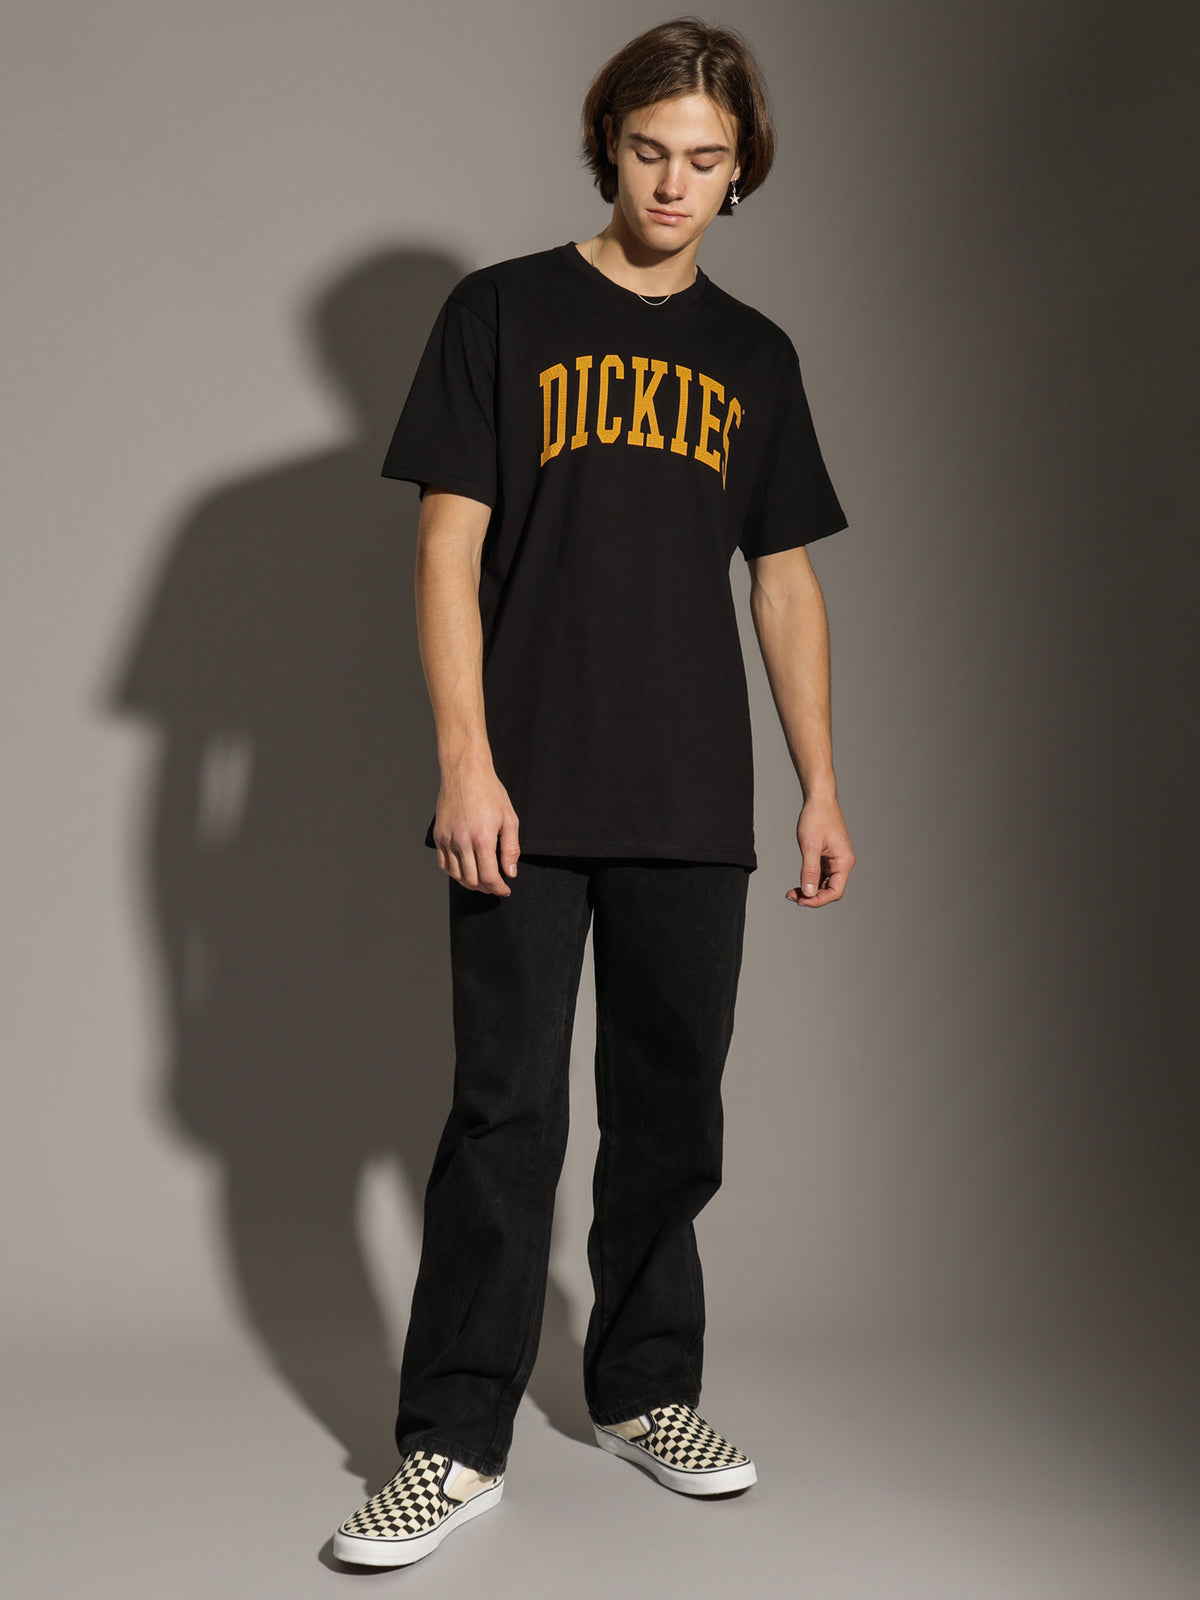 Longview T-Shirt in Black &amp; Yellow